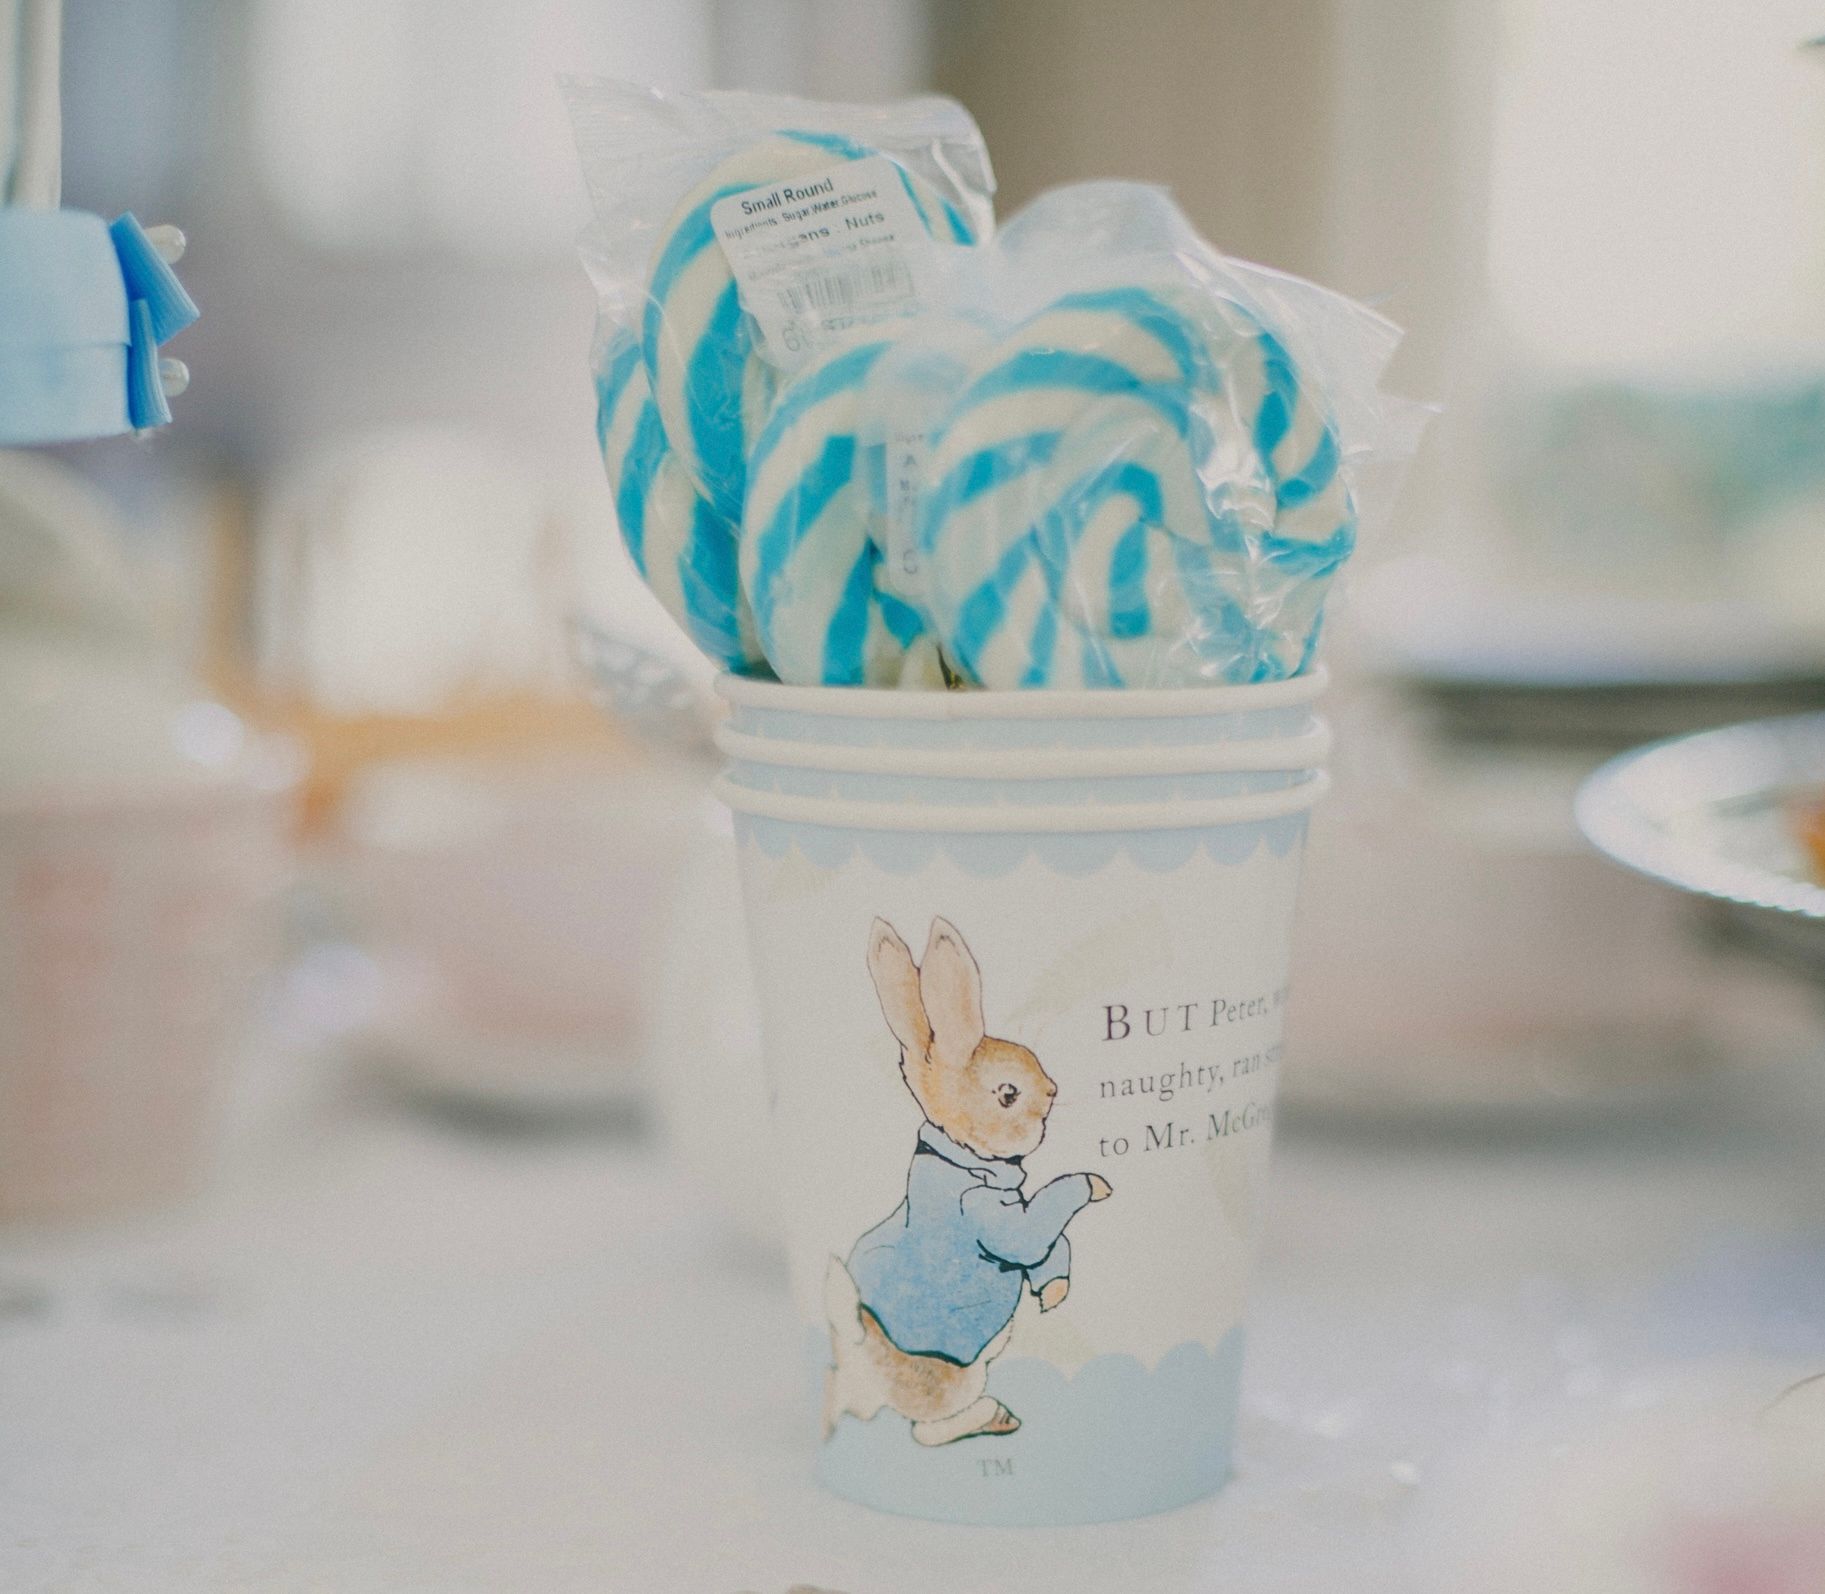 Rabbit Tea Party - Beatrix Potter | Greeting Card